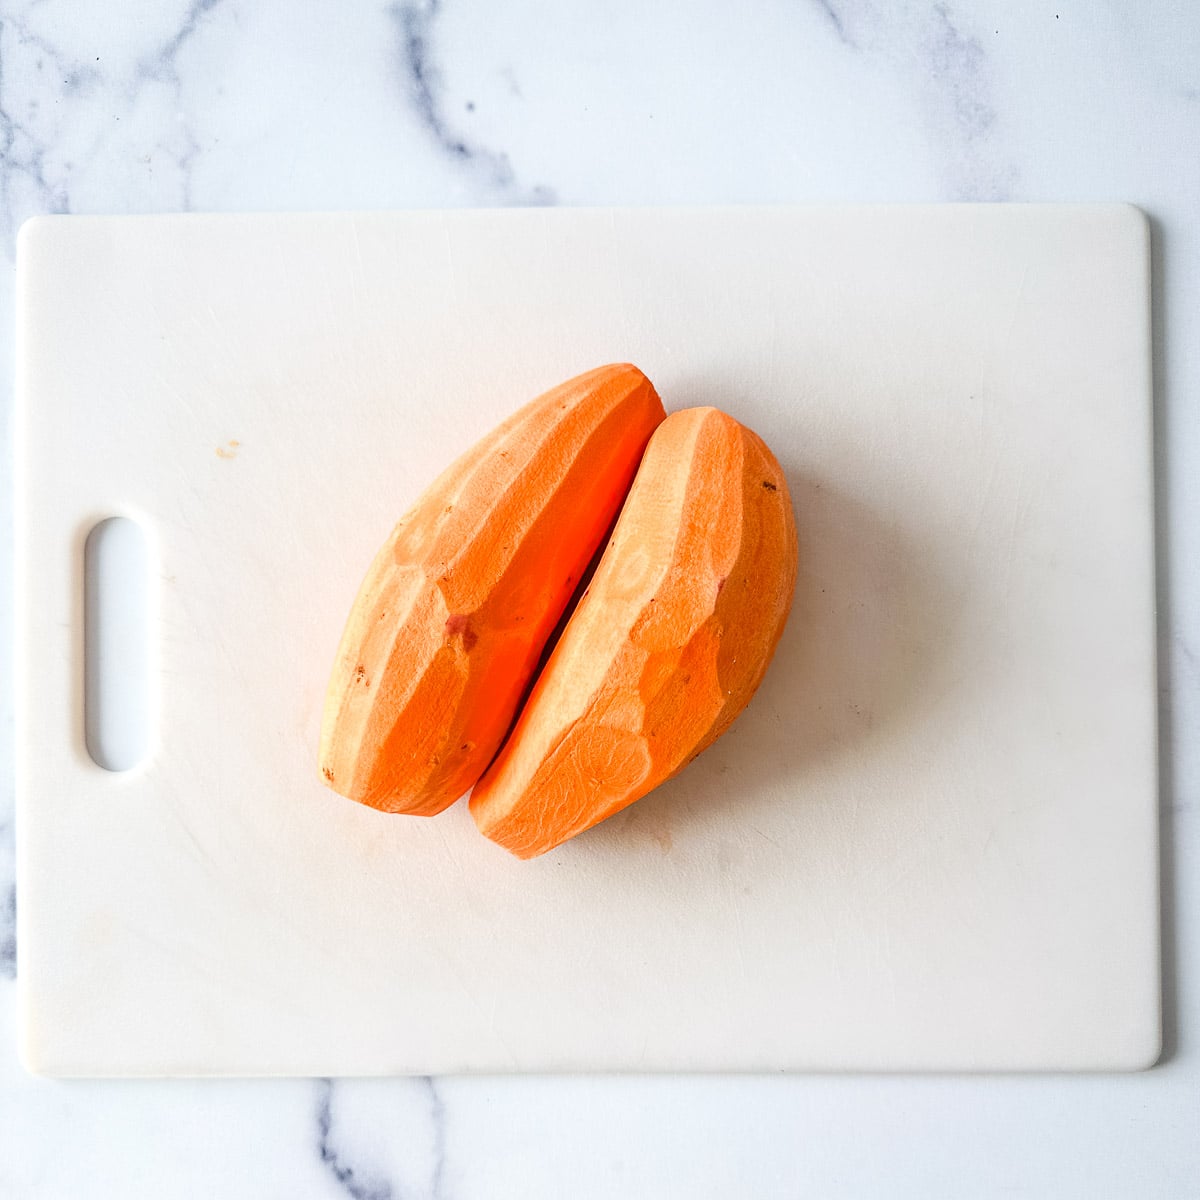 Two peeled sweet potatoes on a cutting board.